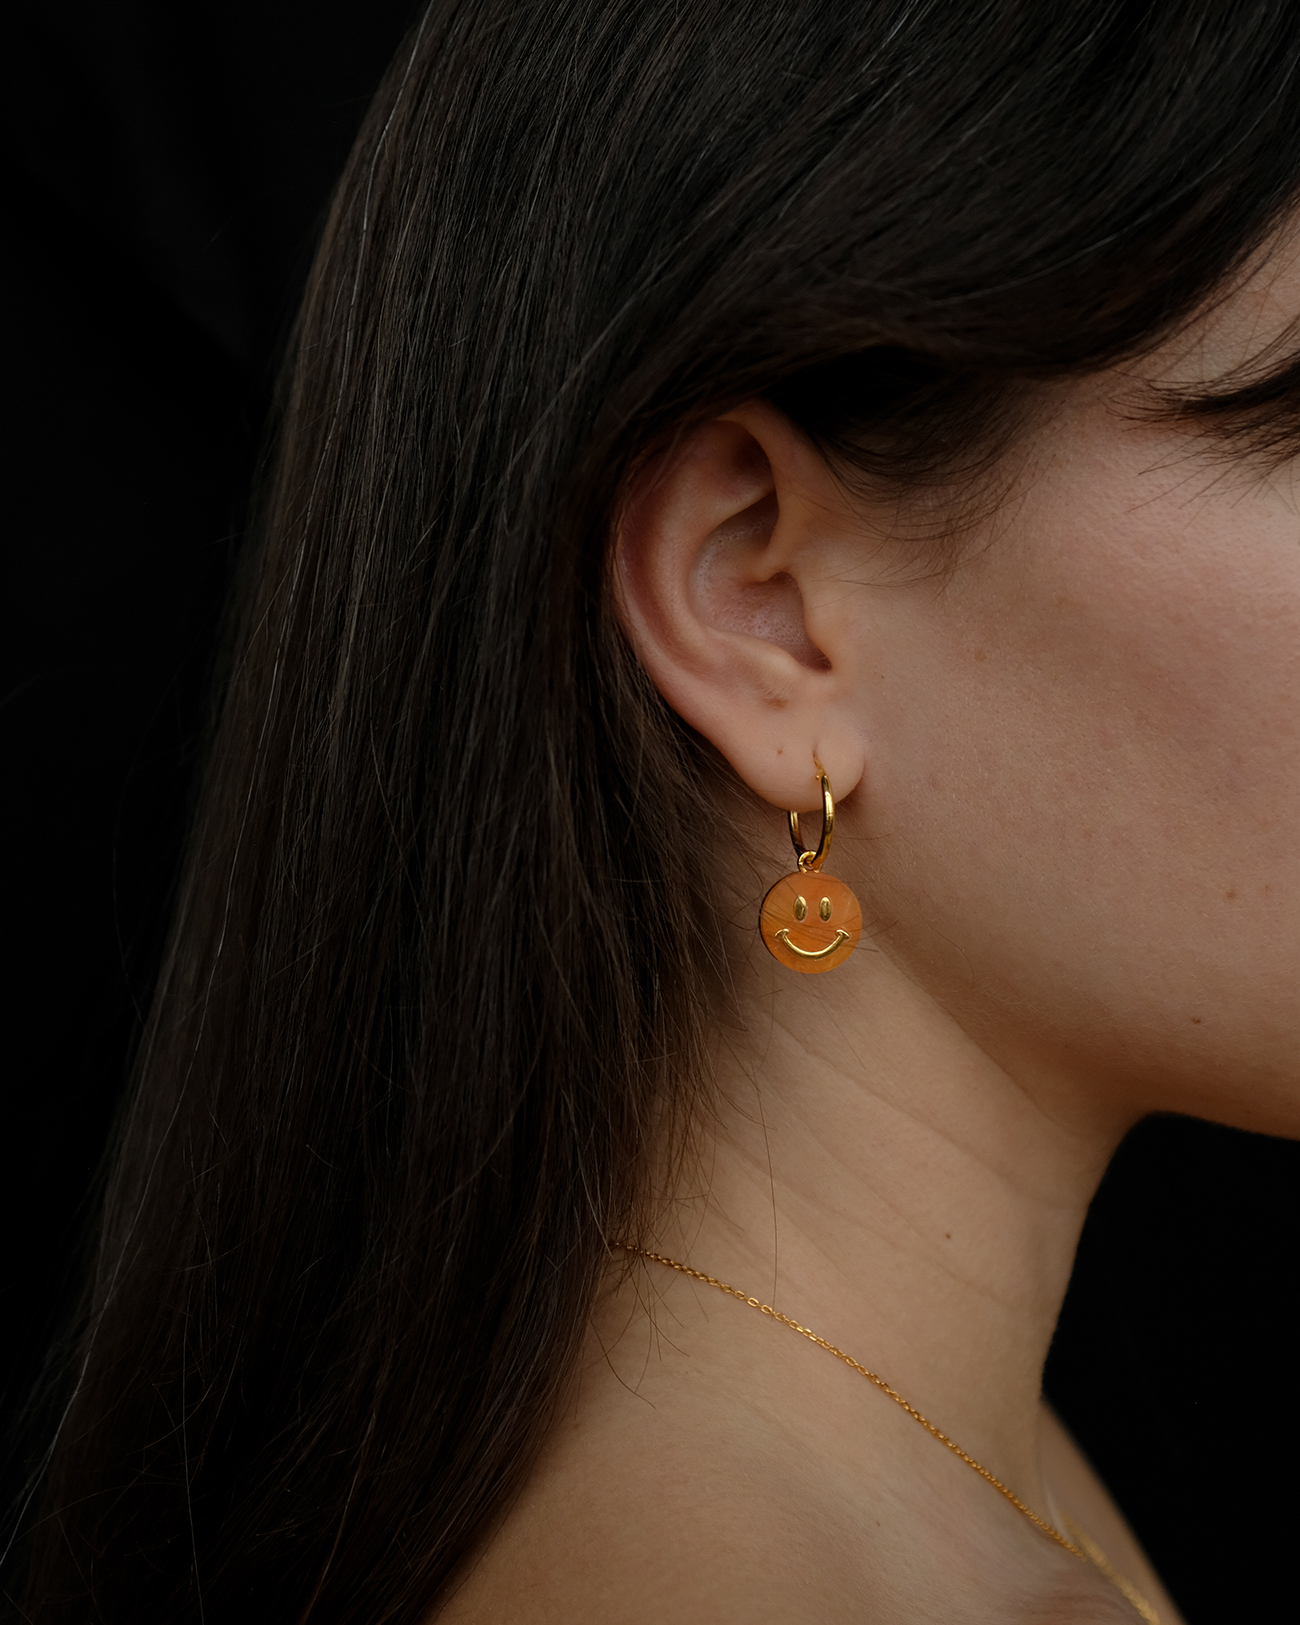 metaformi_design_jewelry_smiley_earrings_model_01